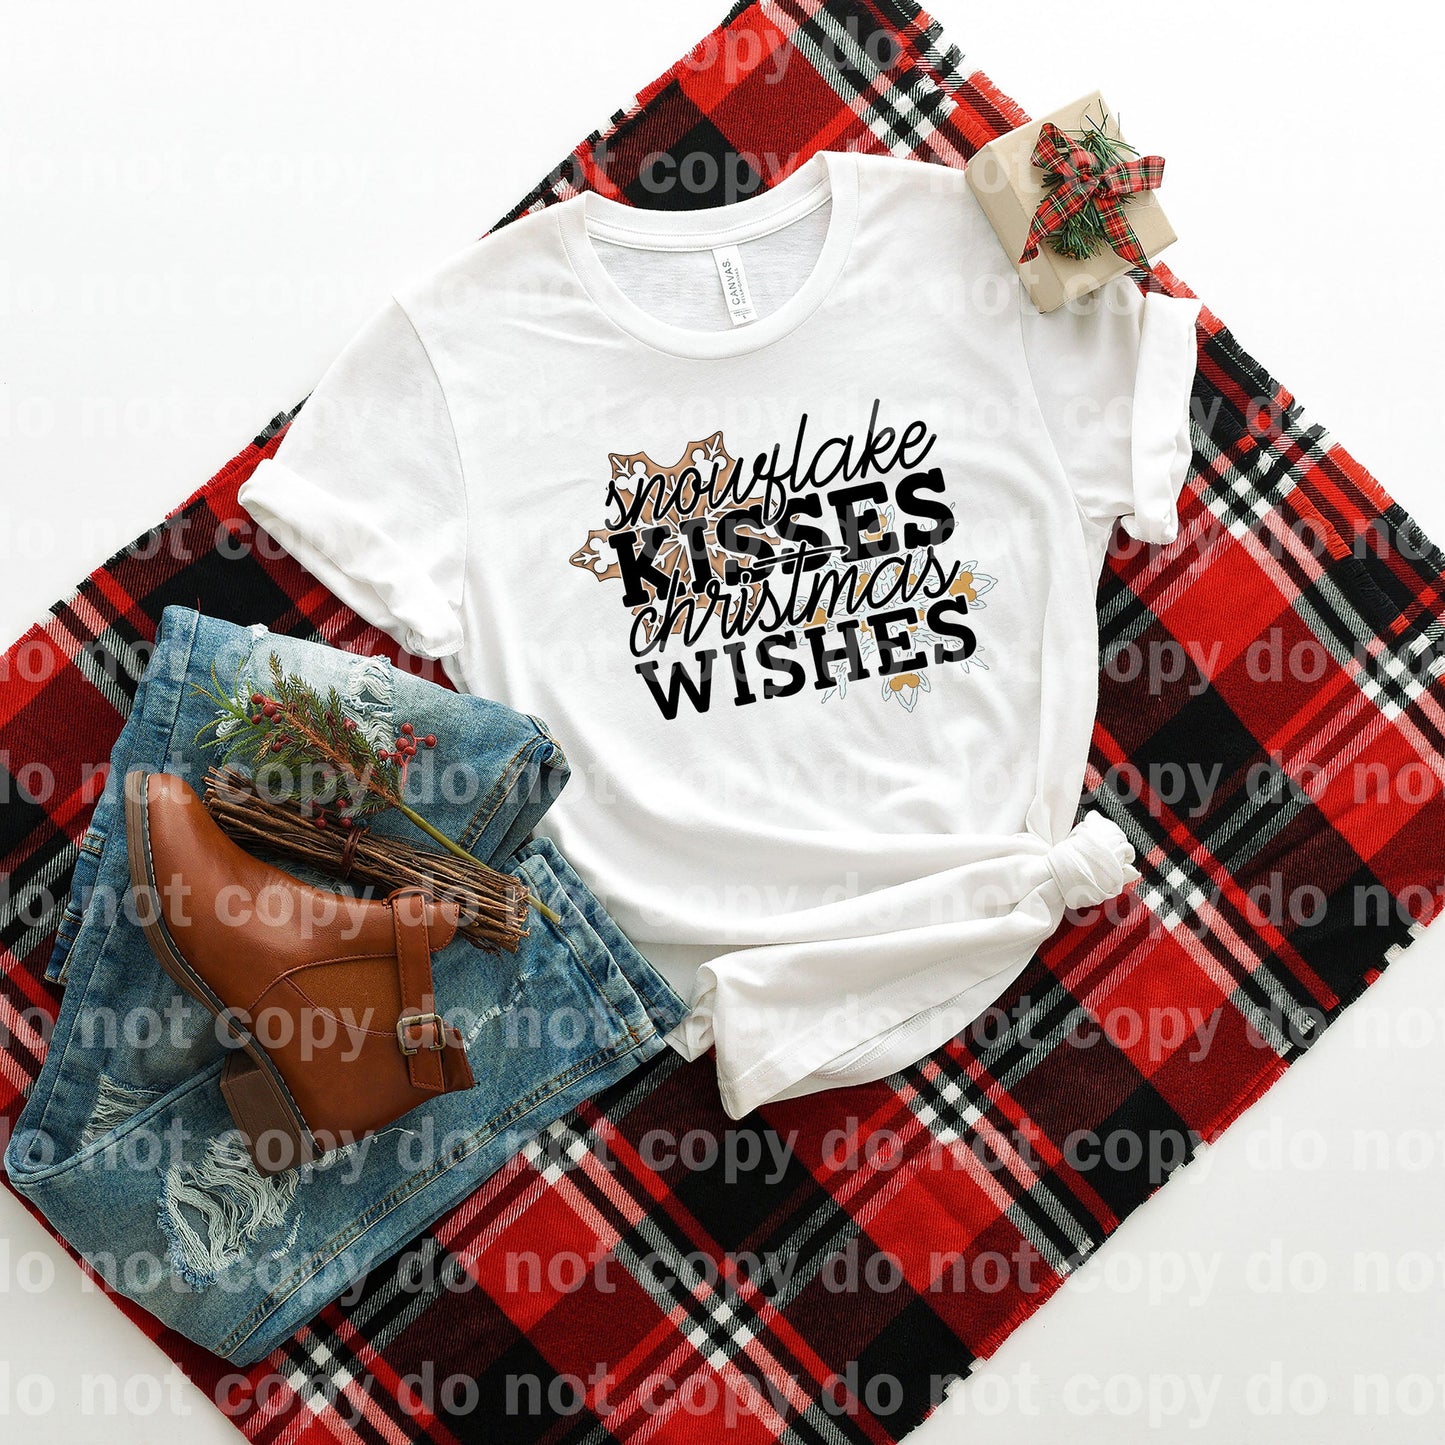 Snowflake Kisses Christmas Wishes Dream Print or Sublimation Print